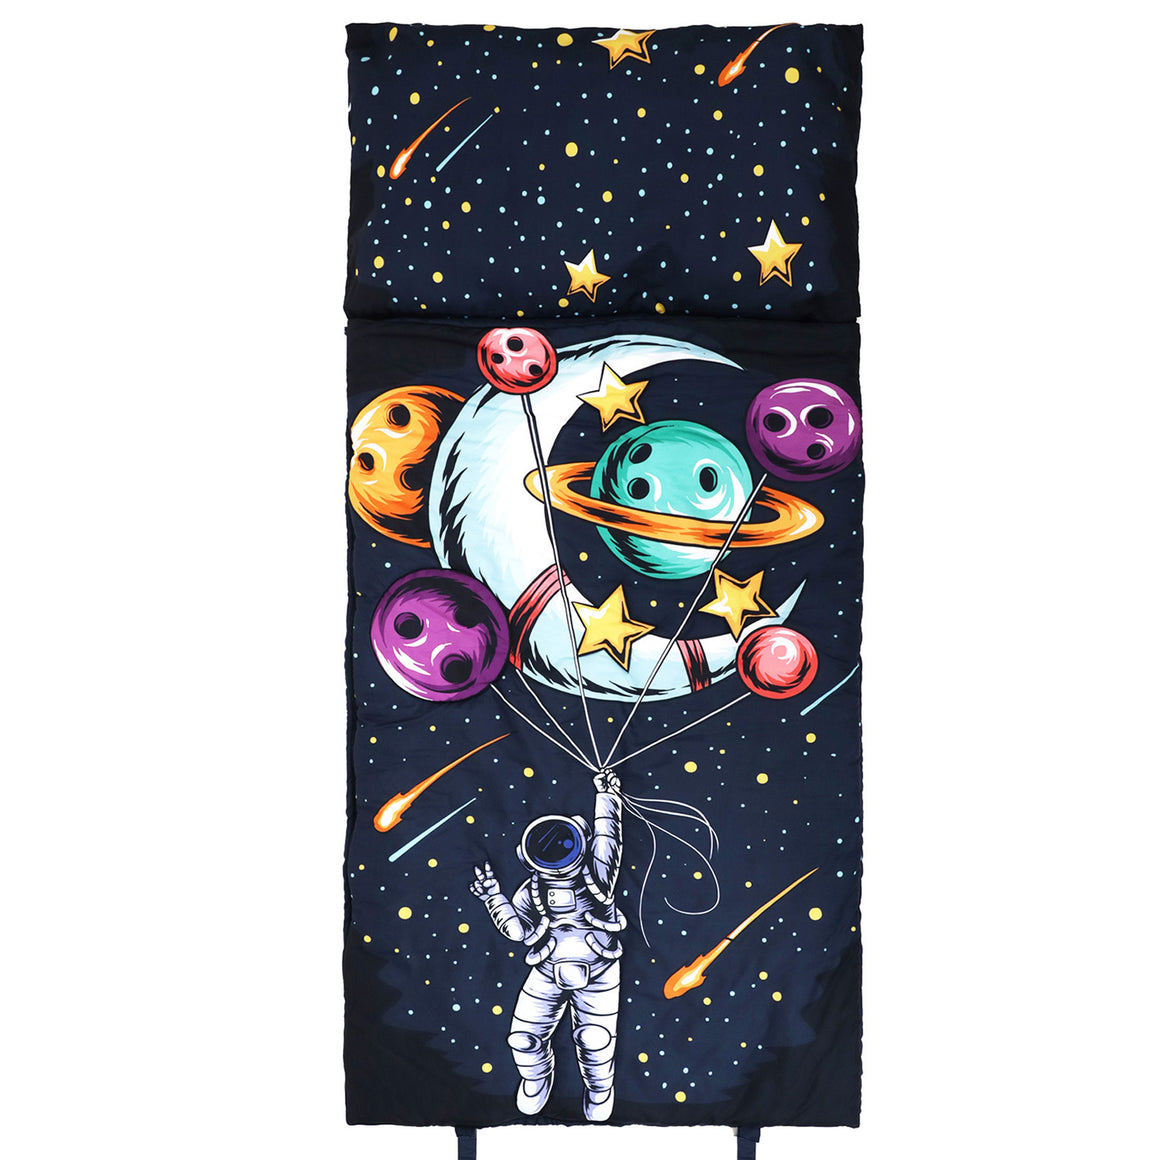 astronaut sleeping bag for kids boys aged 4-10 years